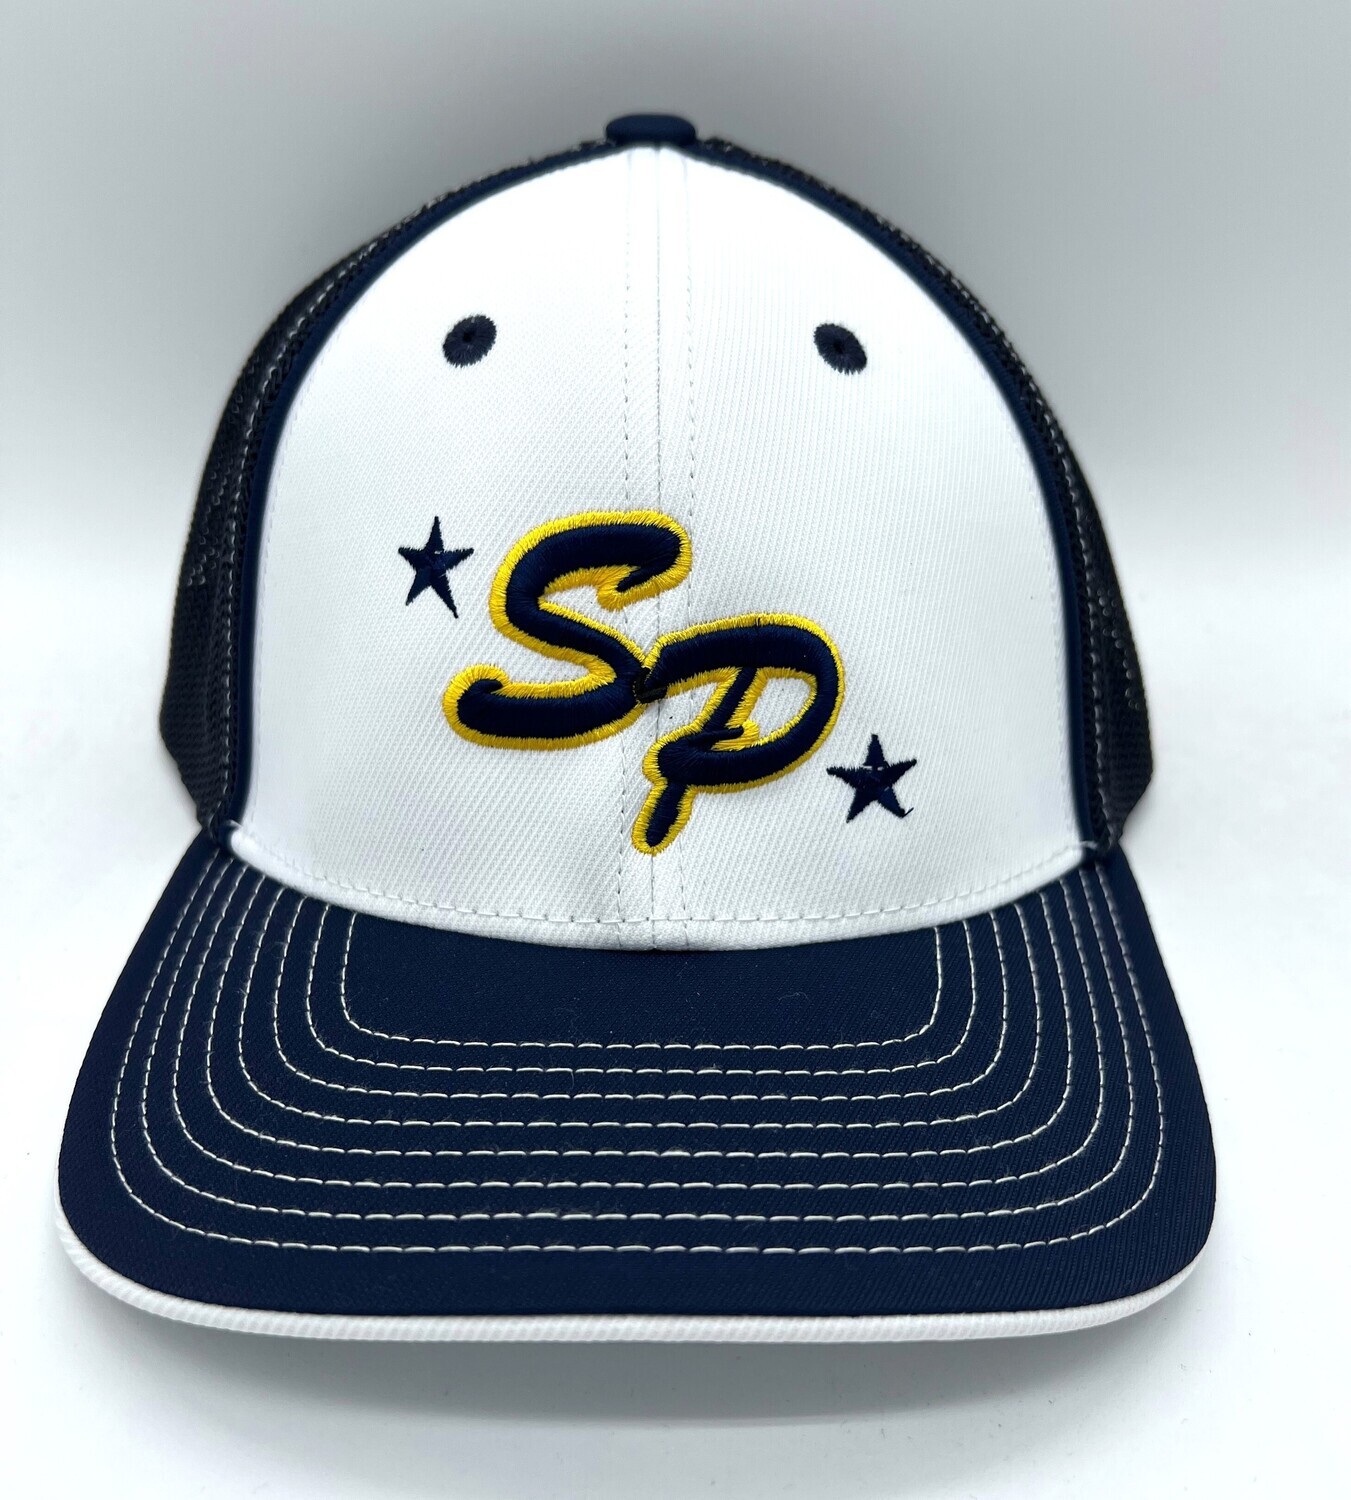 Southern Pitt Adjustable Hat